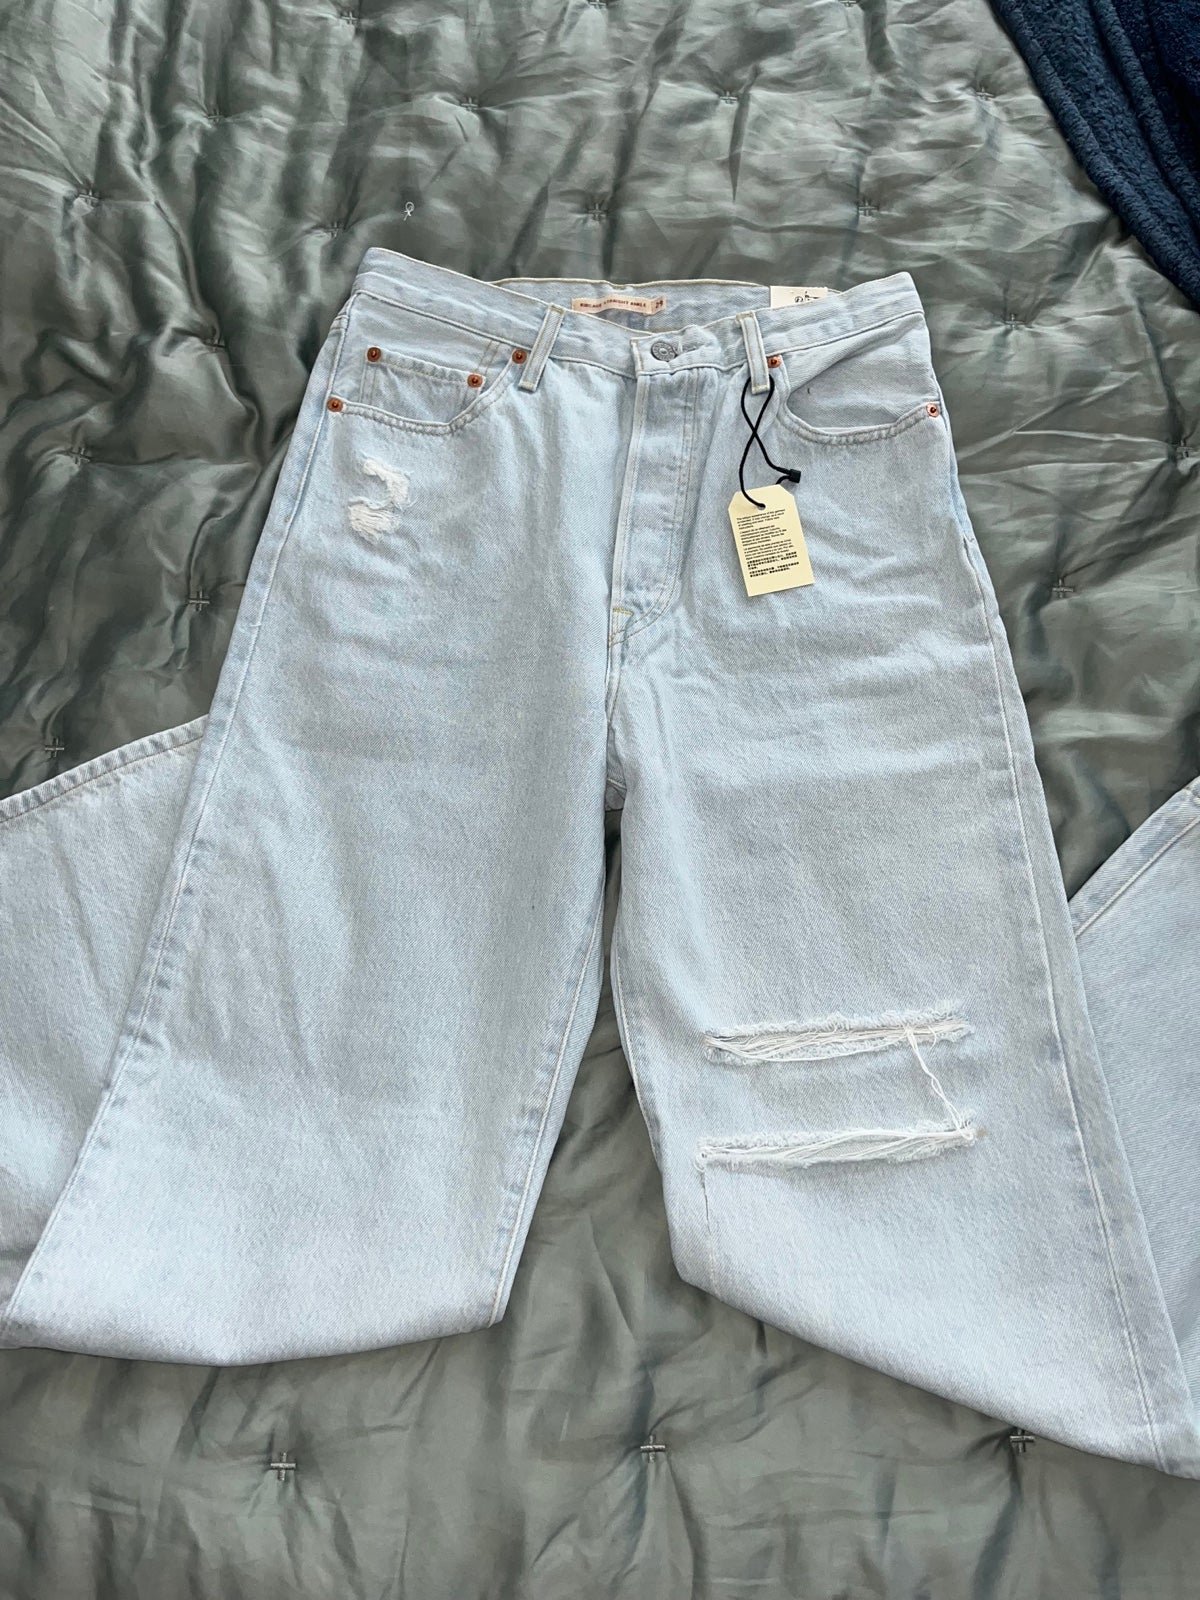 Great NWT Levi’s women’s jeans jyne0iL2K on sale